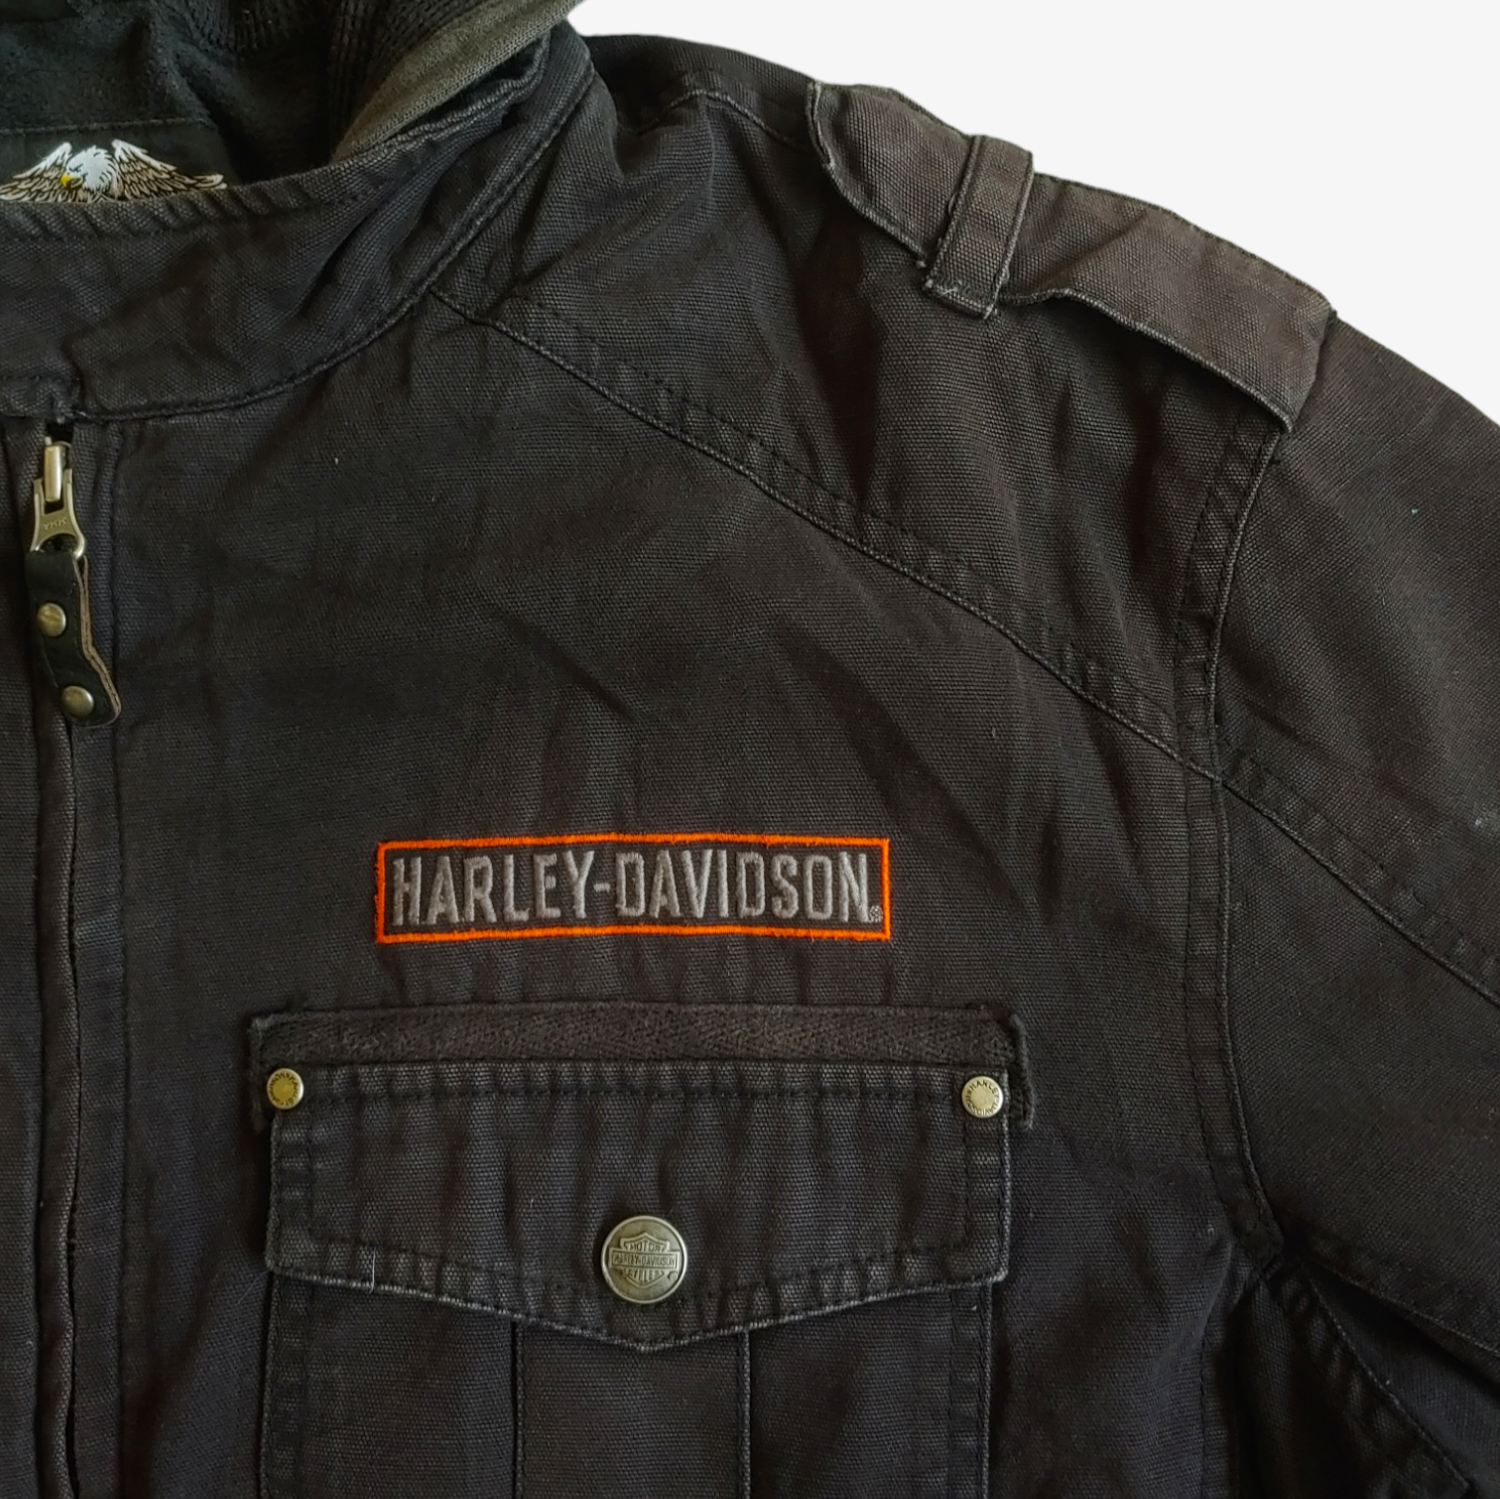 Vintage 90s Harley Davidson Biker Jacket With Back Spell Out Tag - Casspios Dream